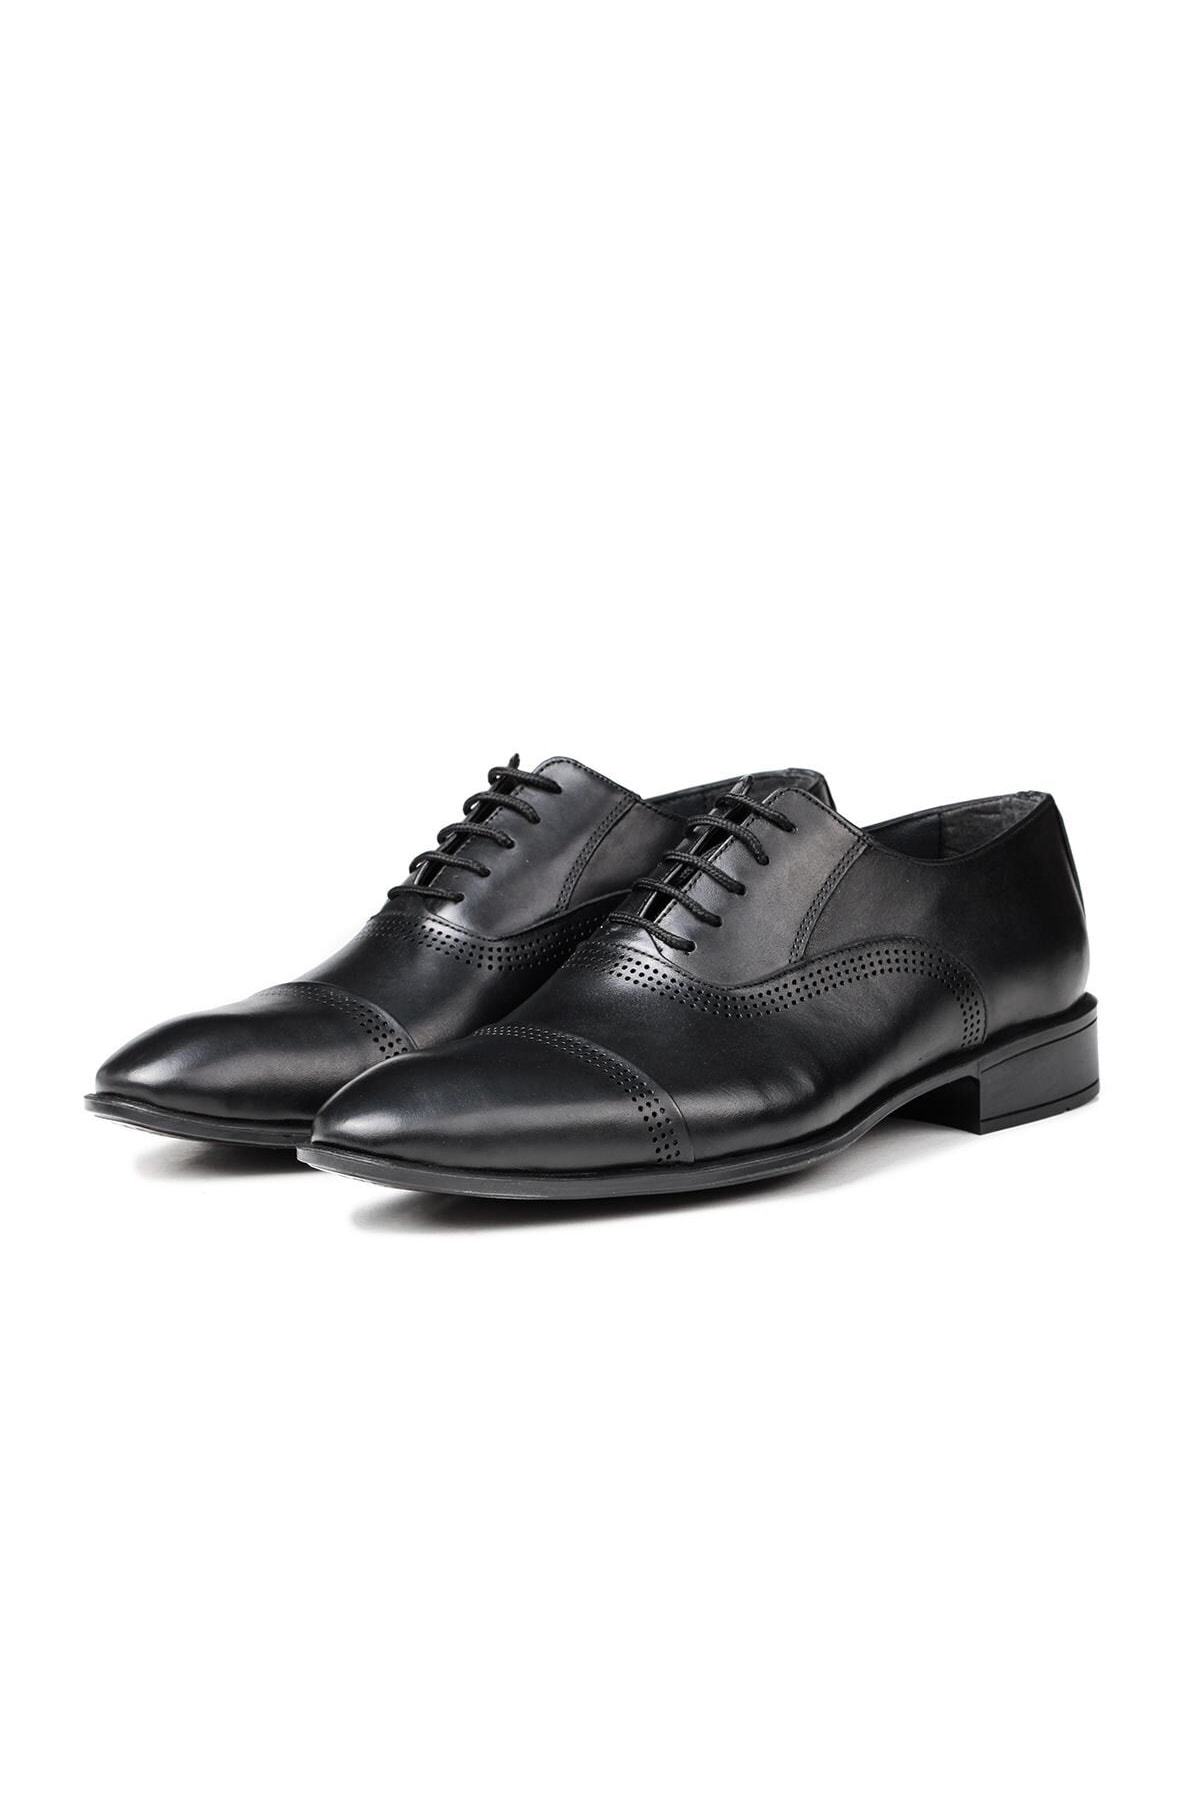 Levně Ducavelli Serious Genuine Leather Men's Classic Shoes, Oxford Classic Shoes